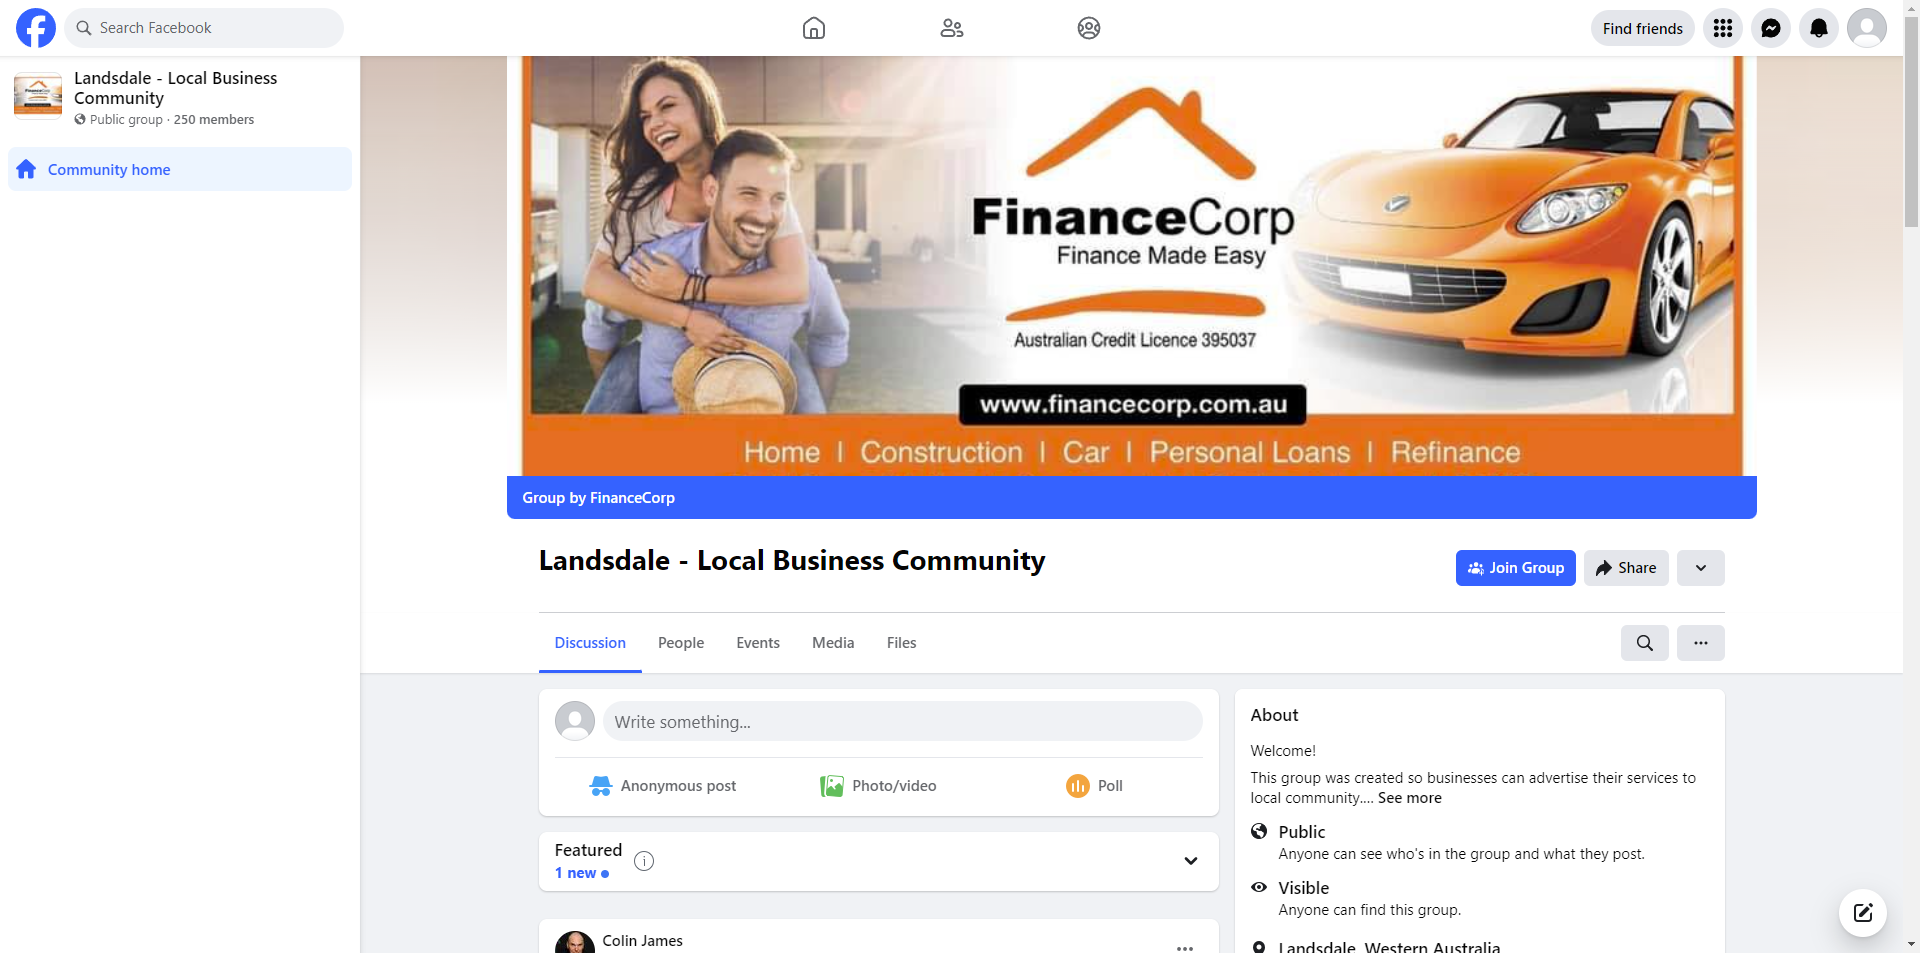 Landsdale - Local Business Community